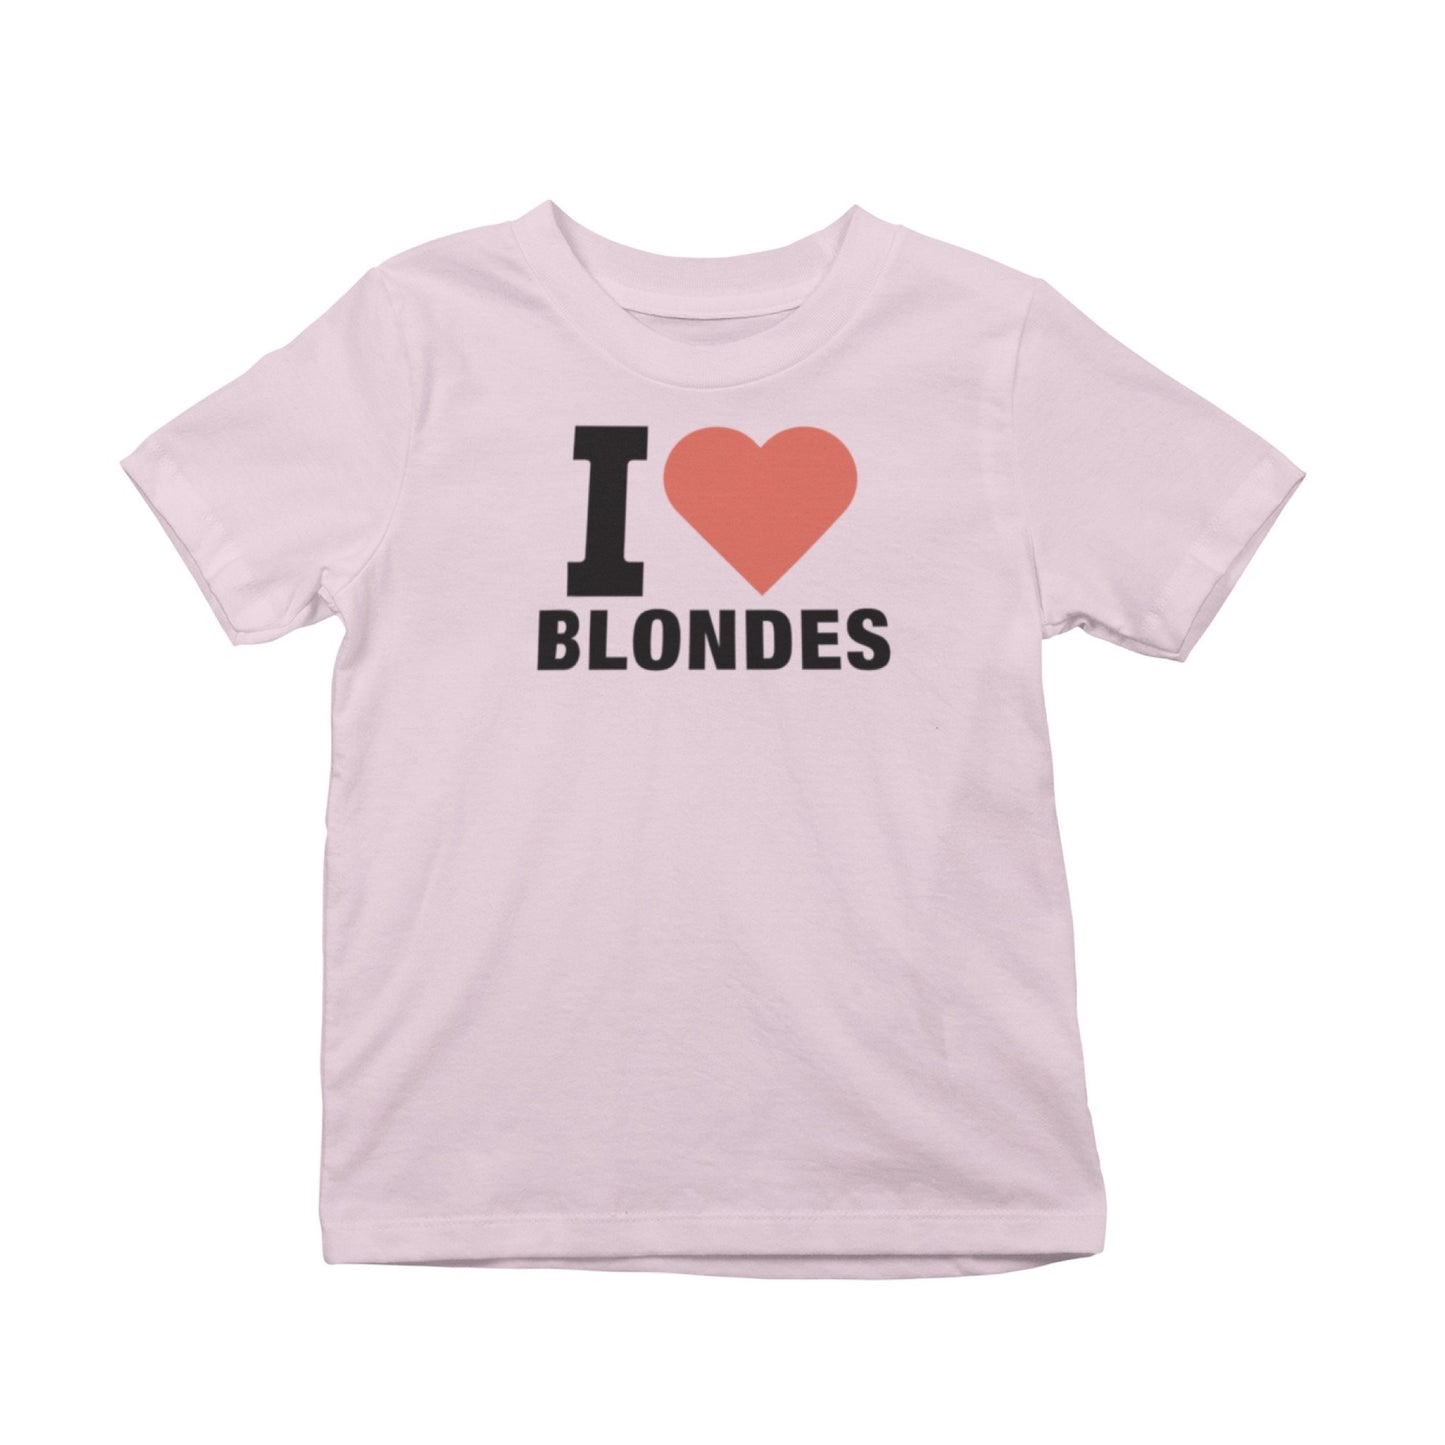 I Heart Blondes T-Shirt